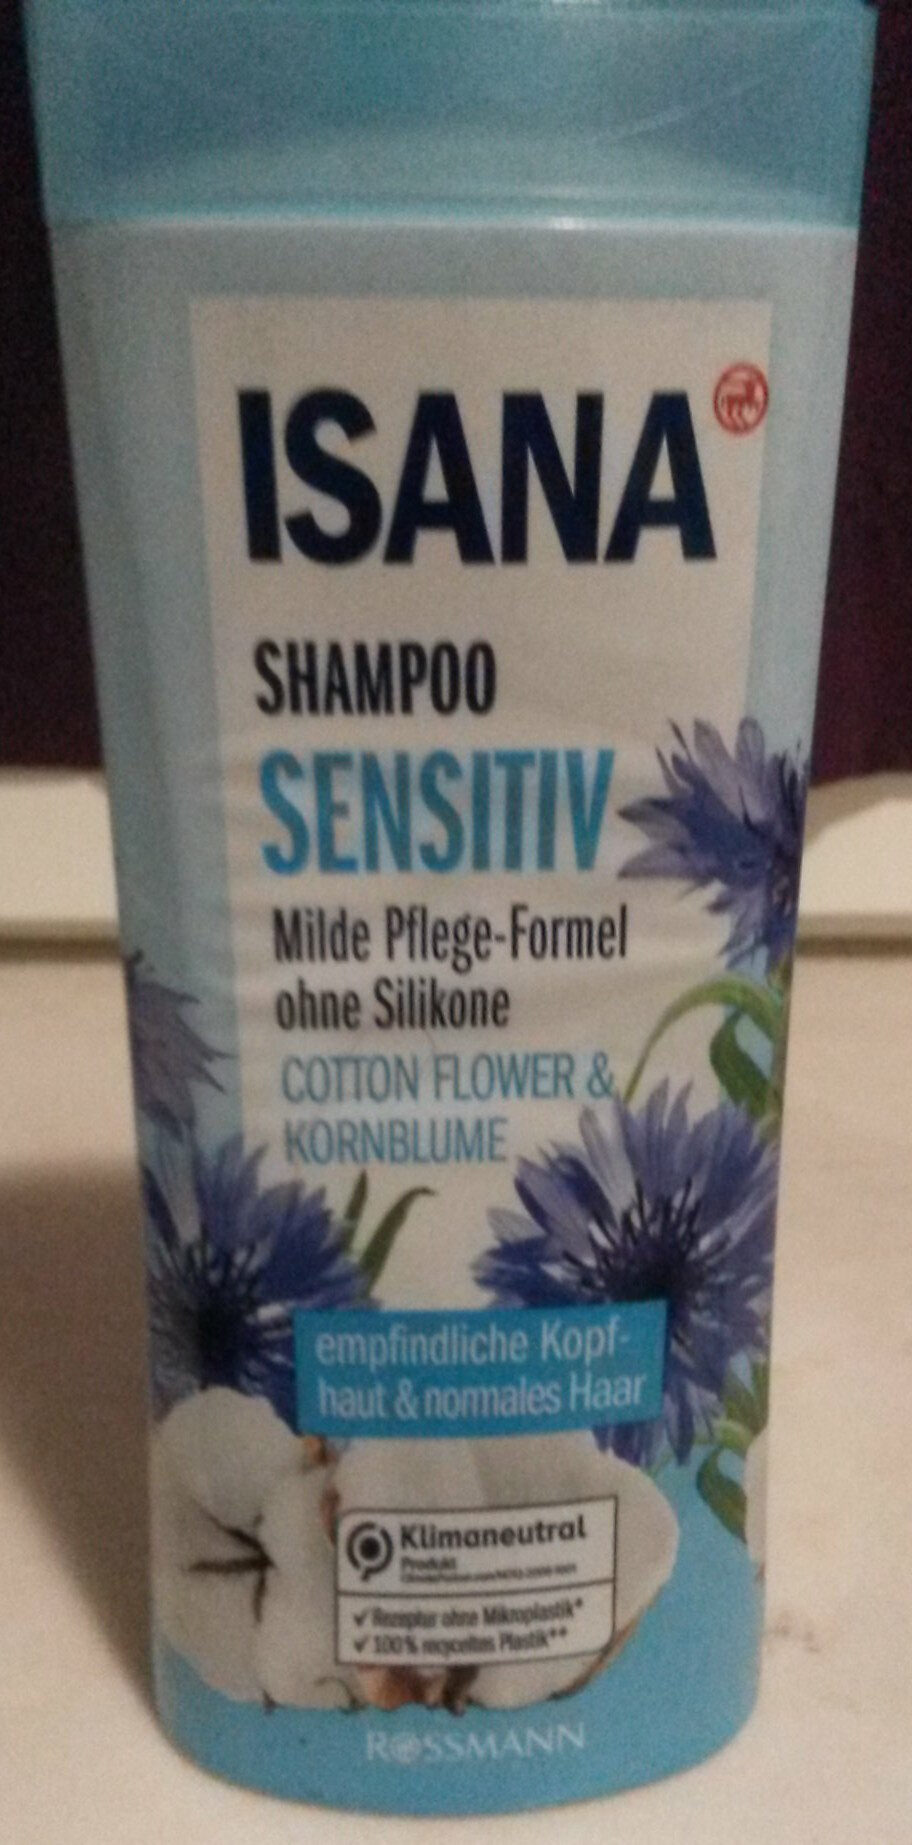 Shampoo sensitiv - Produkt - de